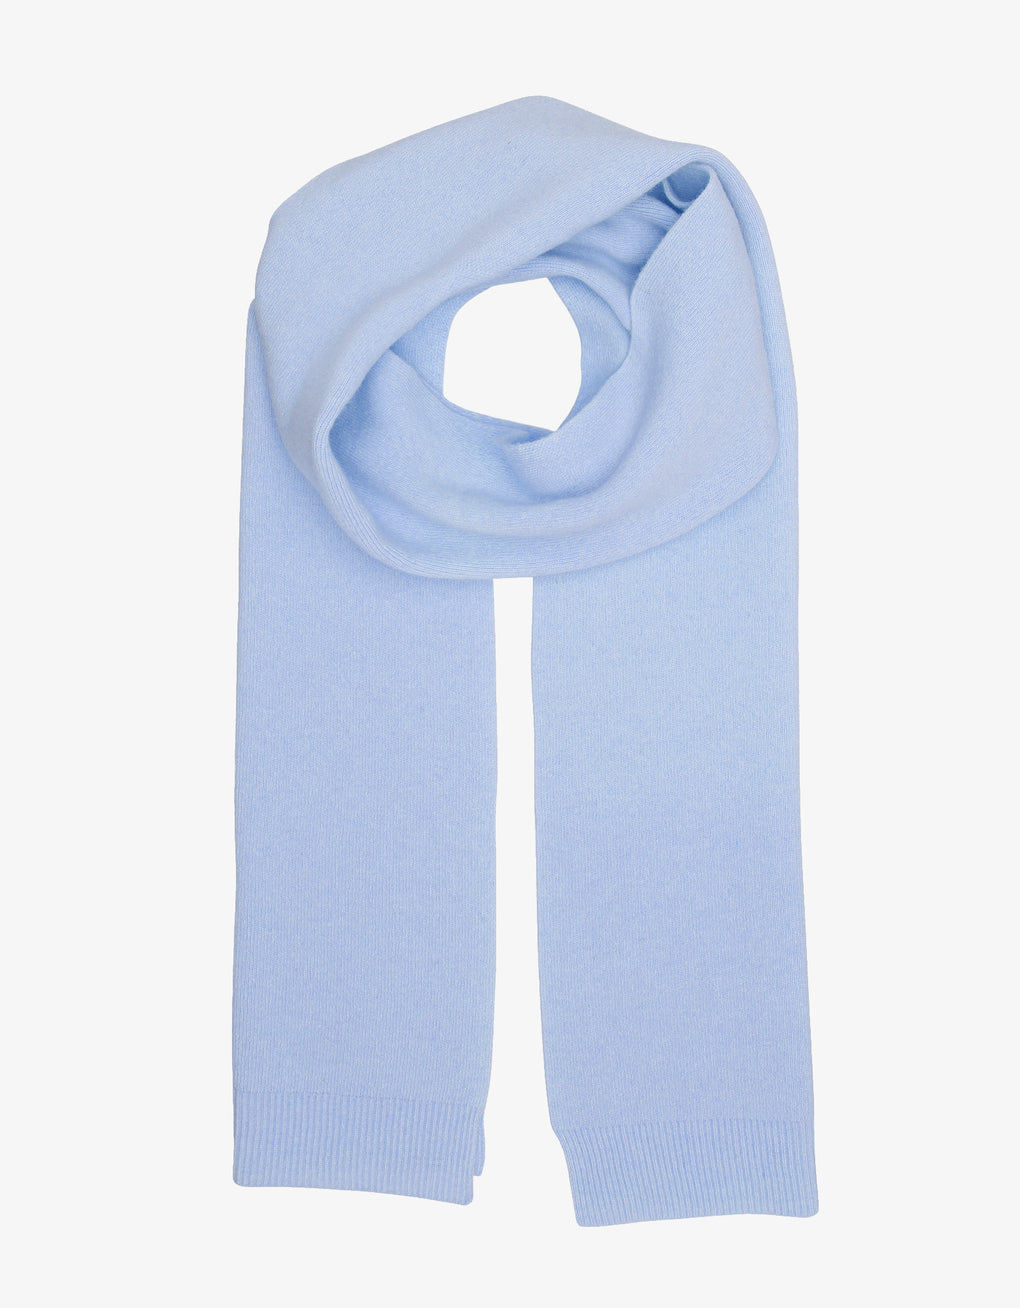 Merino wool scarf - polar blue